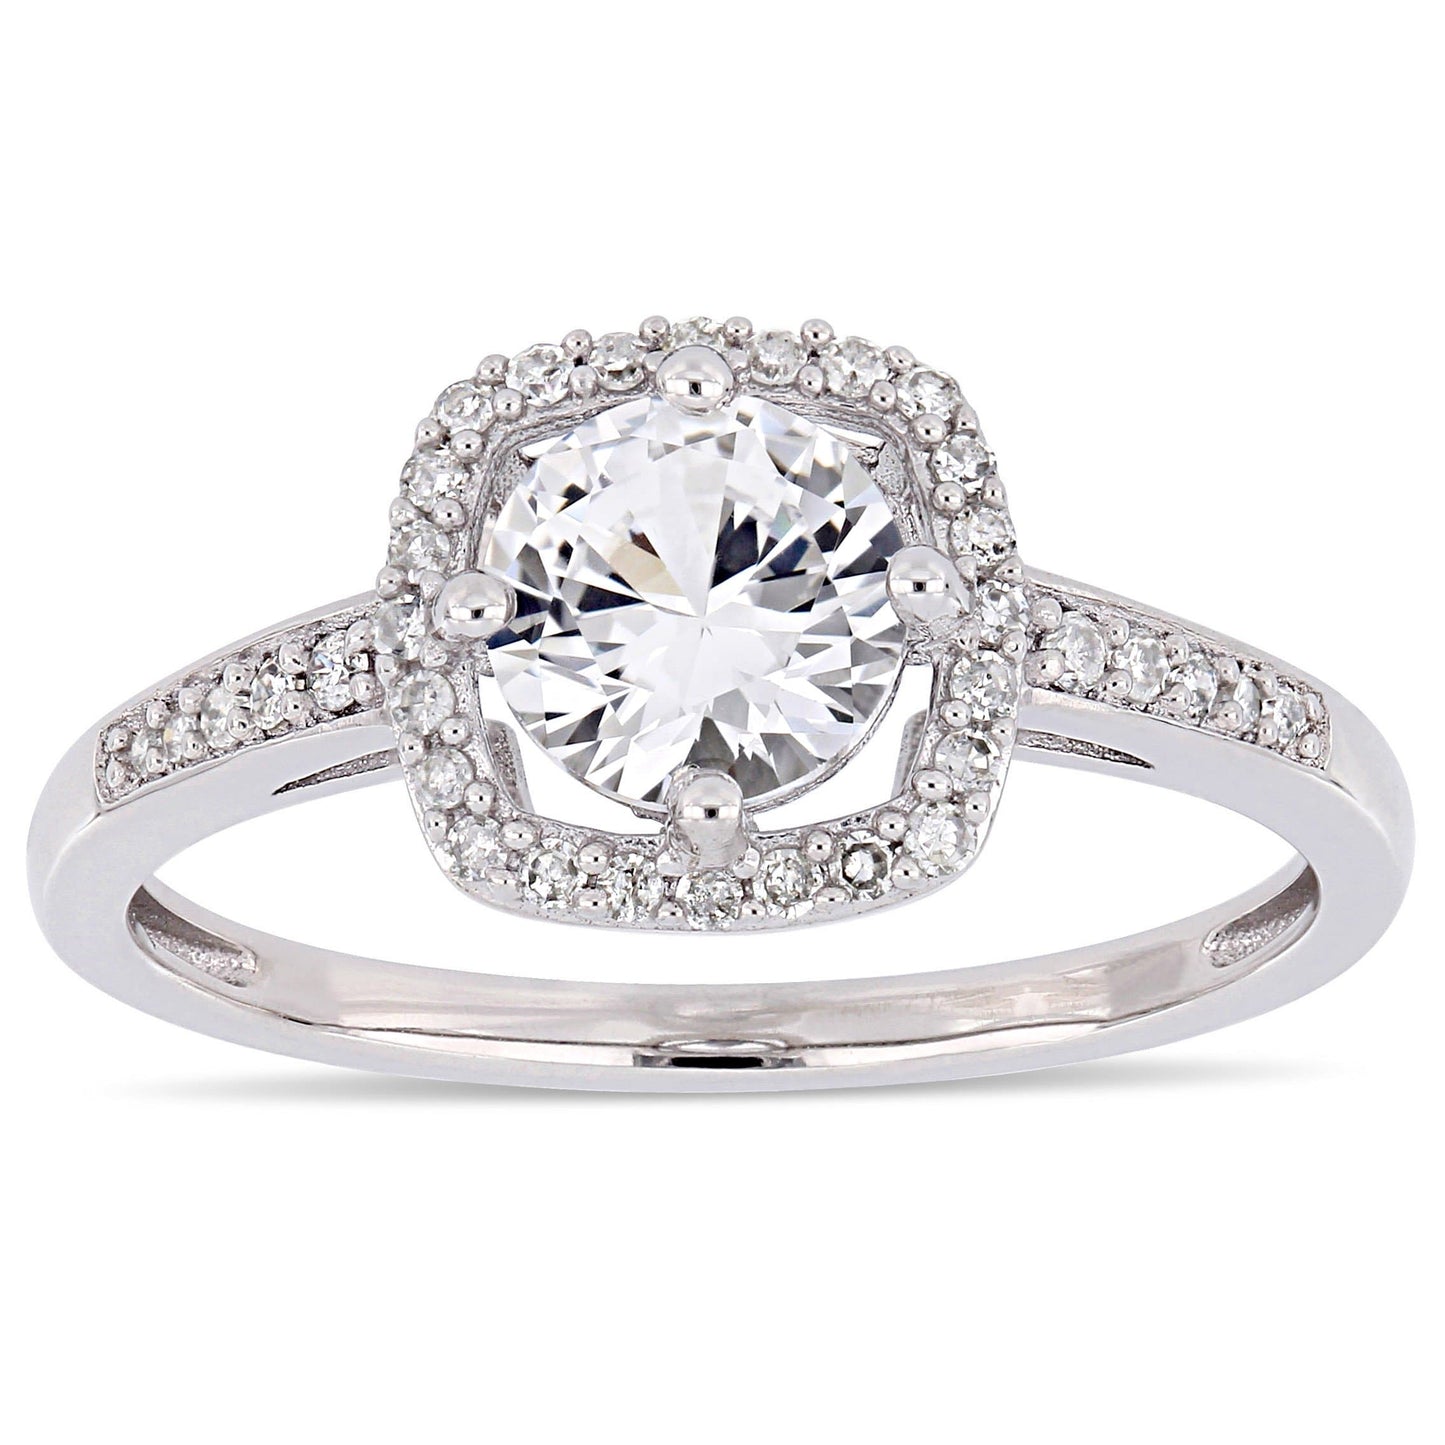 Julie Leah White Sapphire & Diamond Halo Ring in 10k White Gold